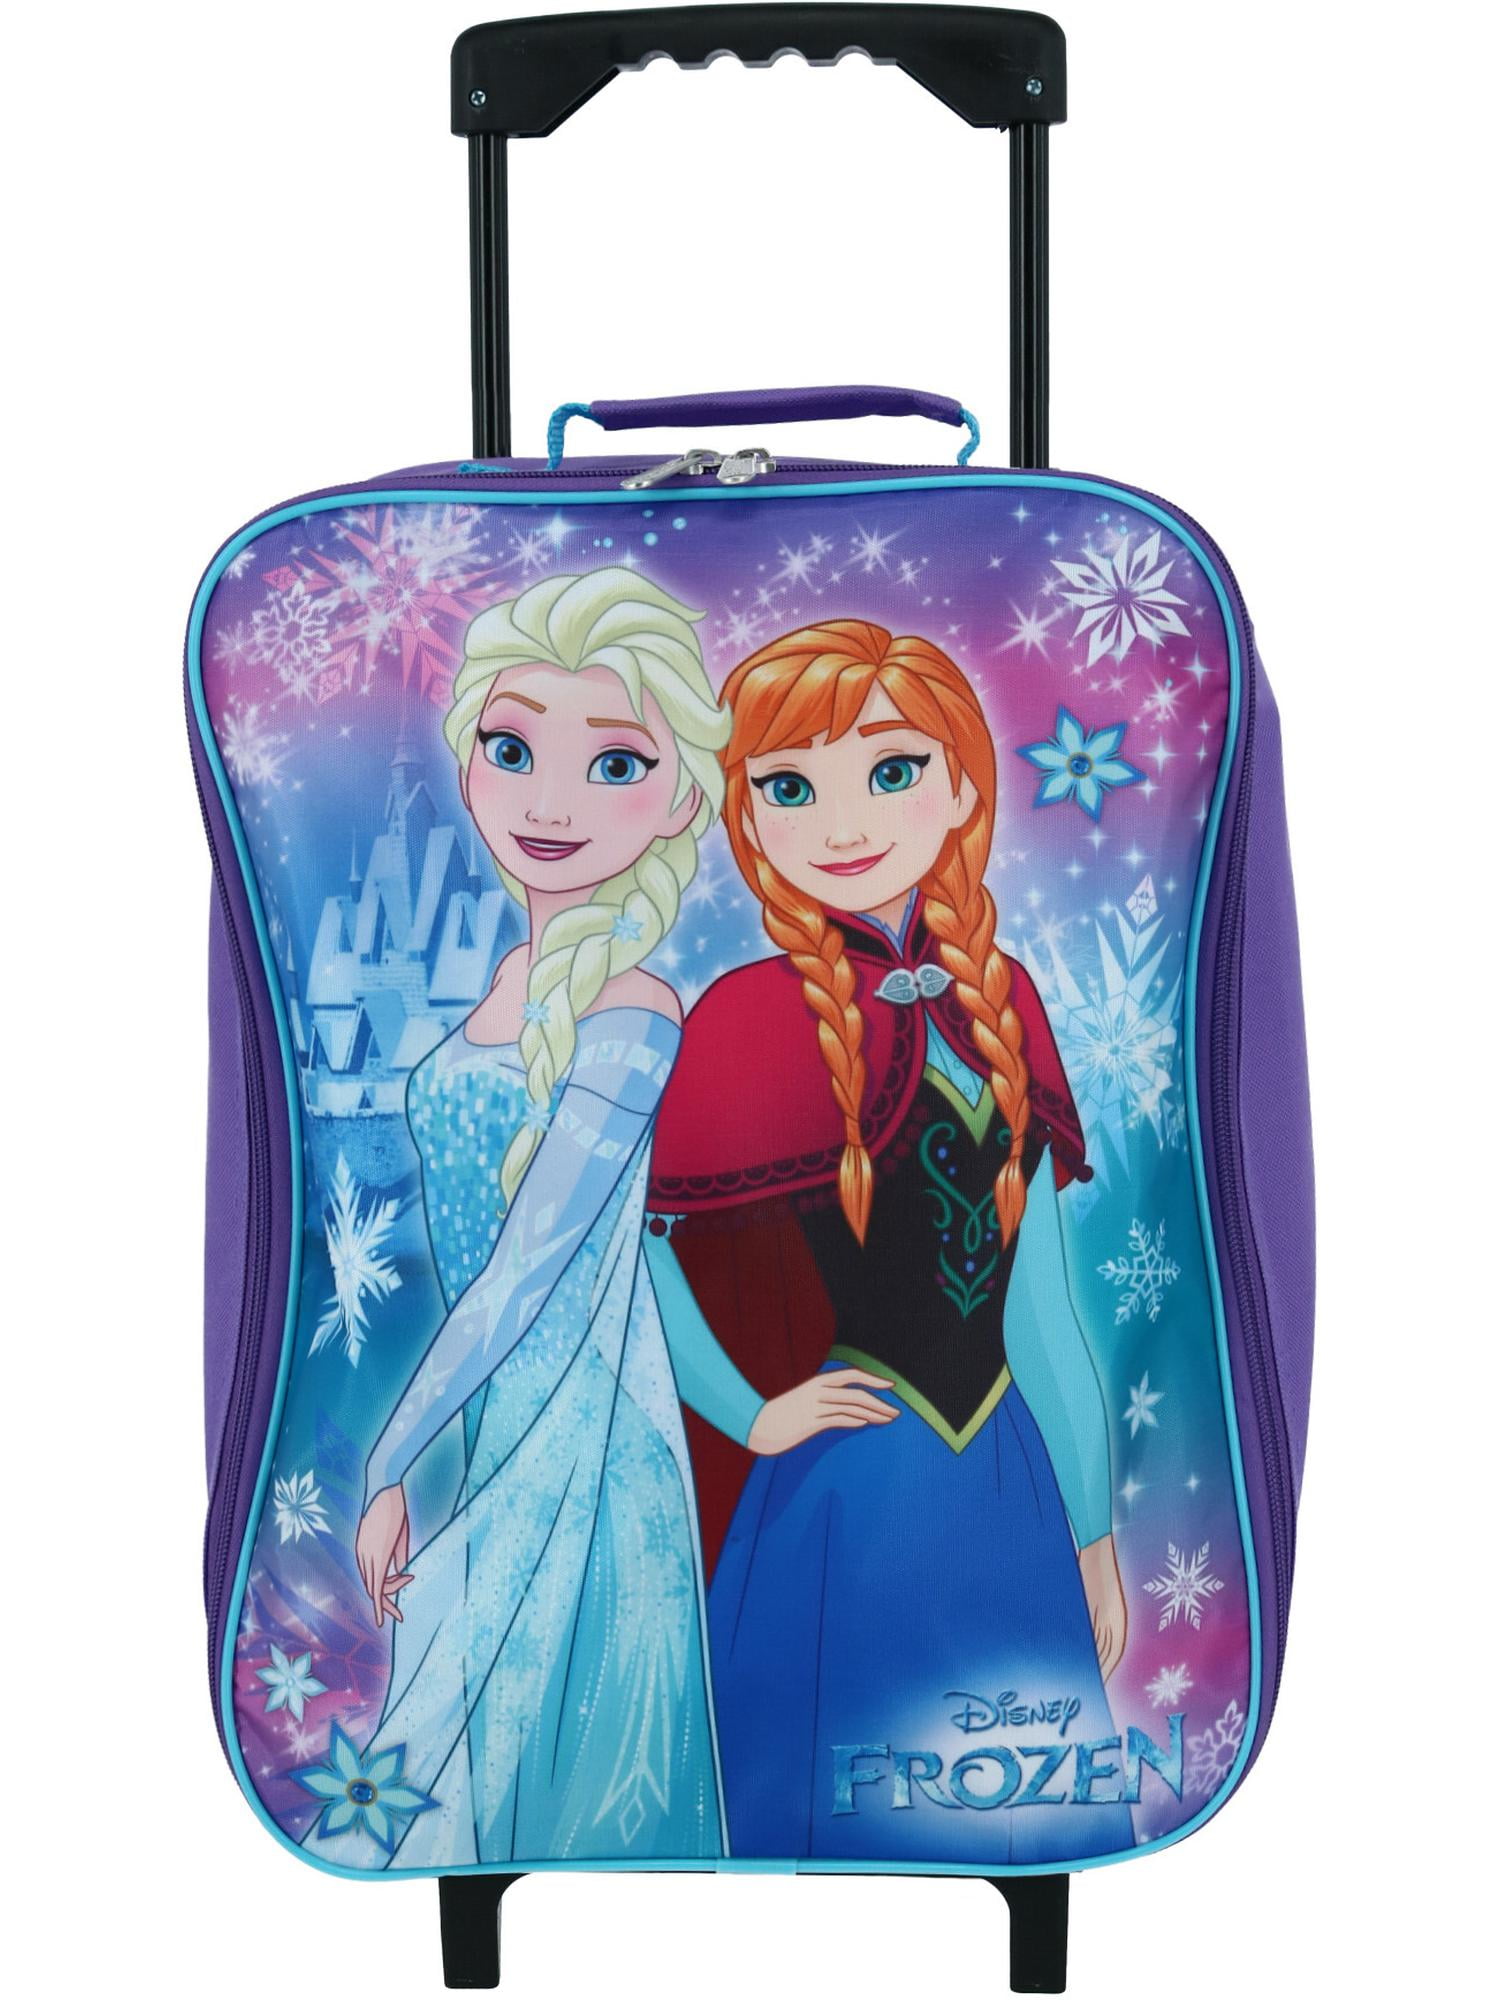 Disney Disney Girl's Frozen Rolling Luggage Walmart